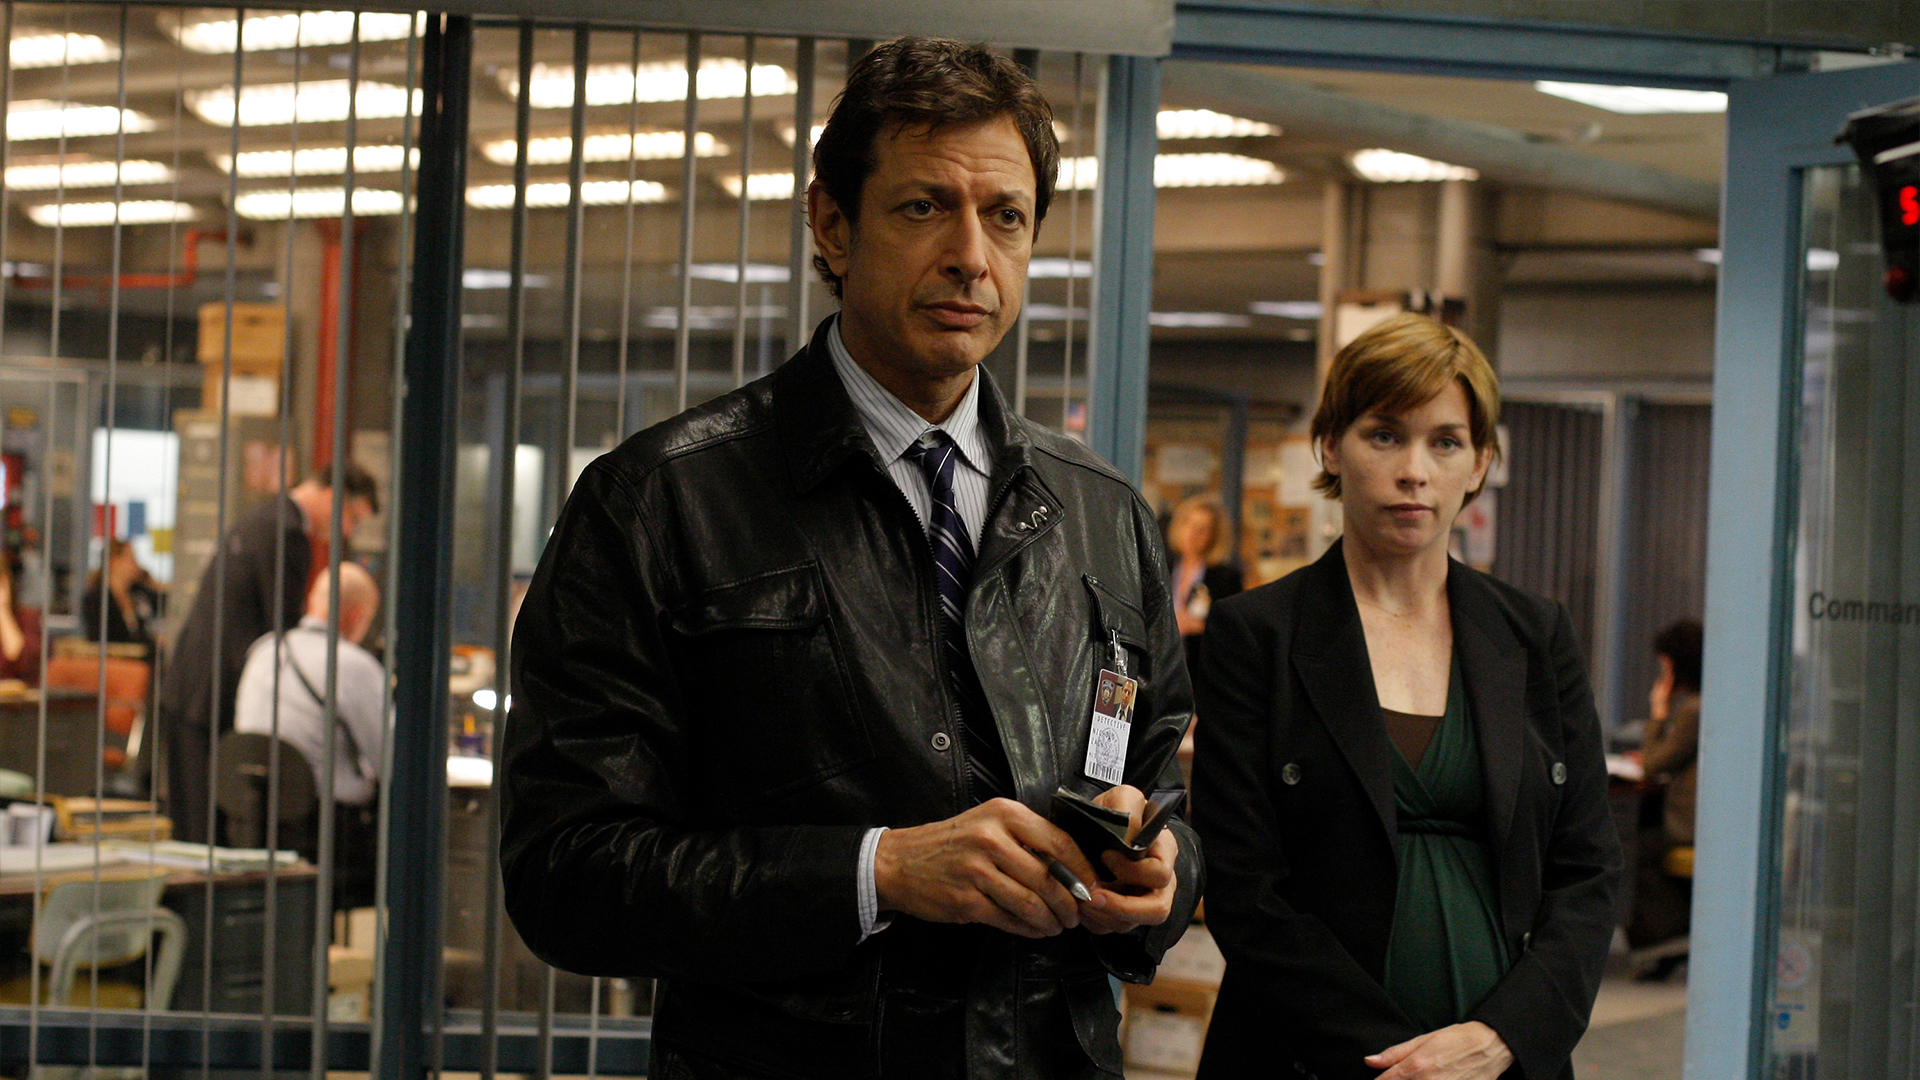 Law & Order: Criminal Intent Season 8 Episode 13 - All In